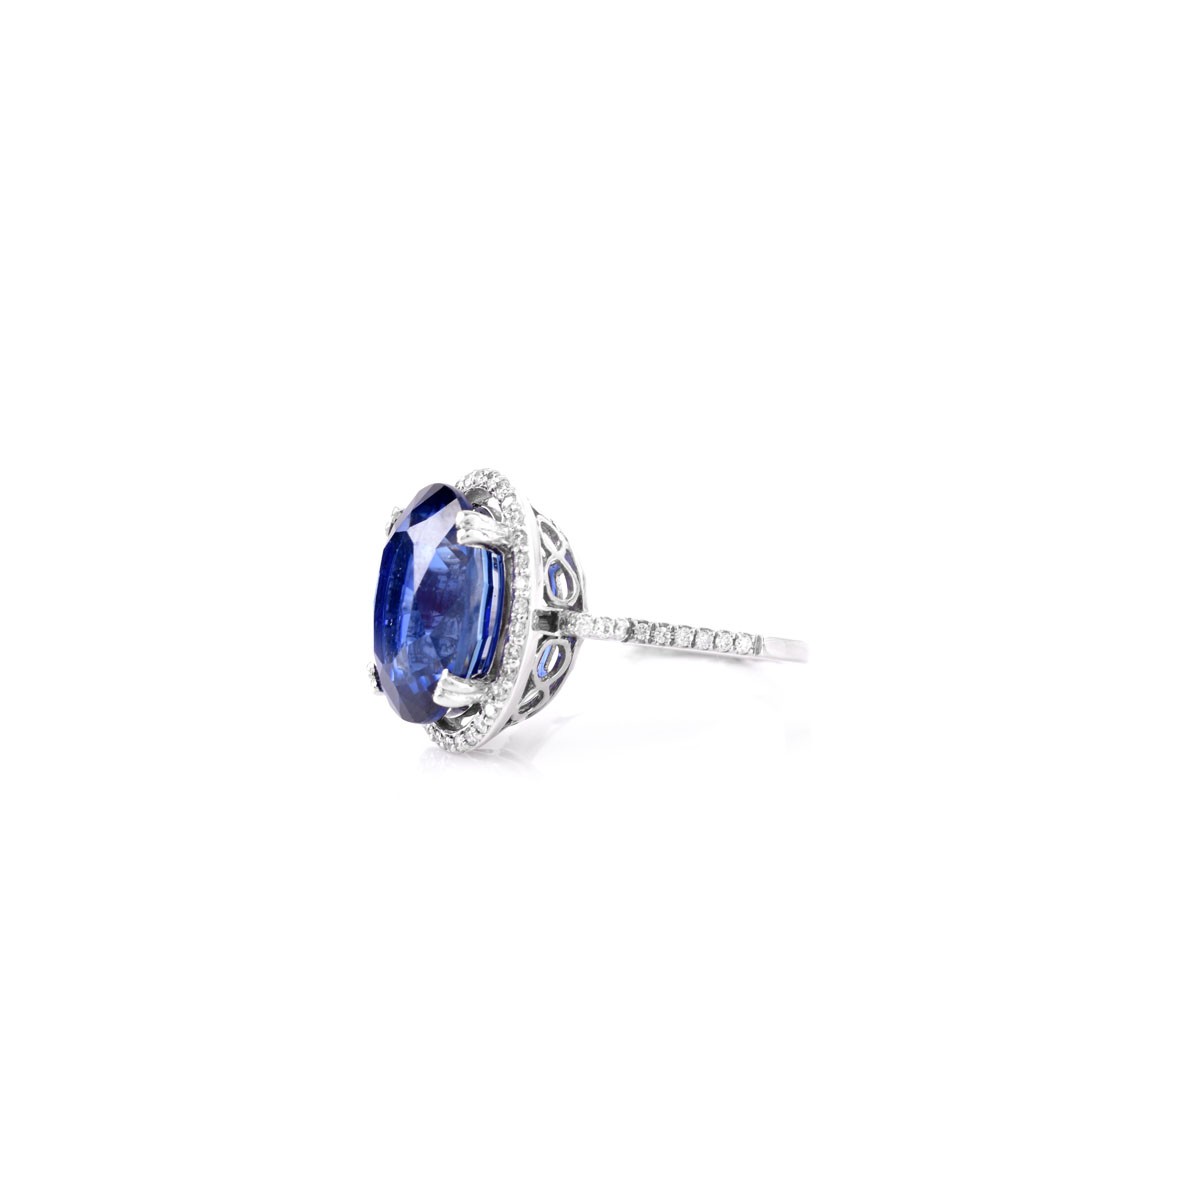 Oval Cut Sapphire, Diamond &14 Kt White Gold Ring